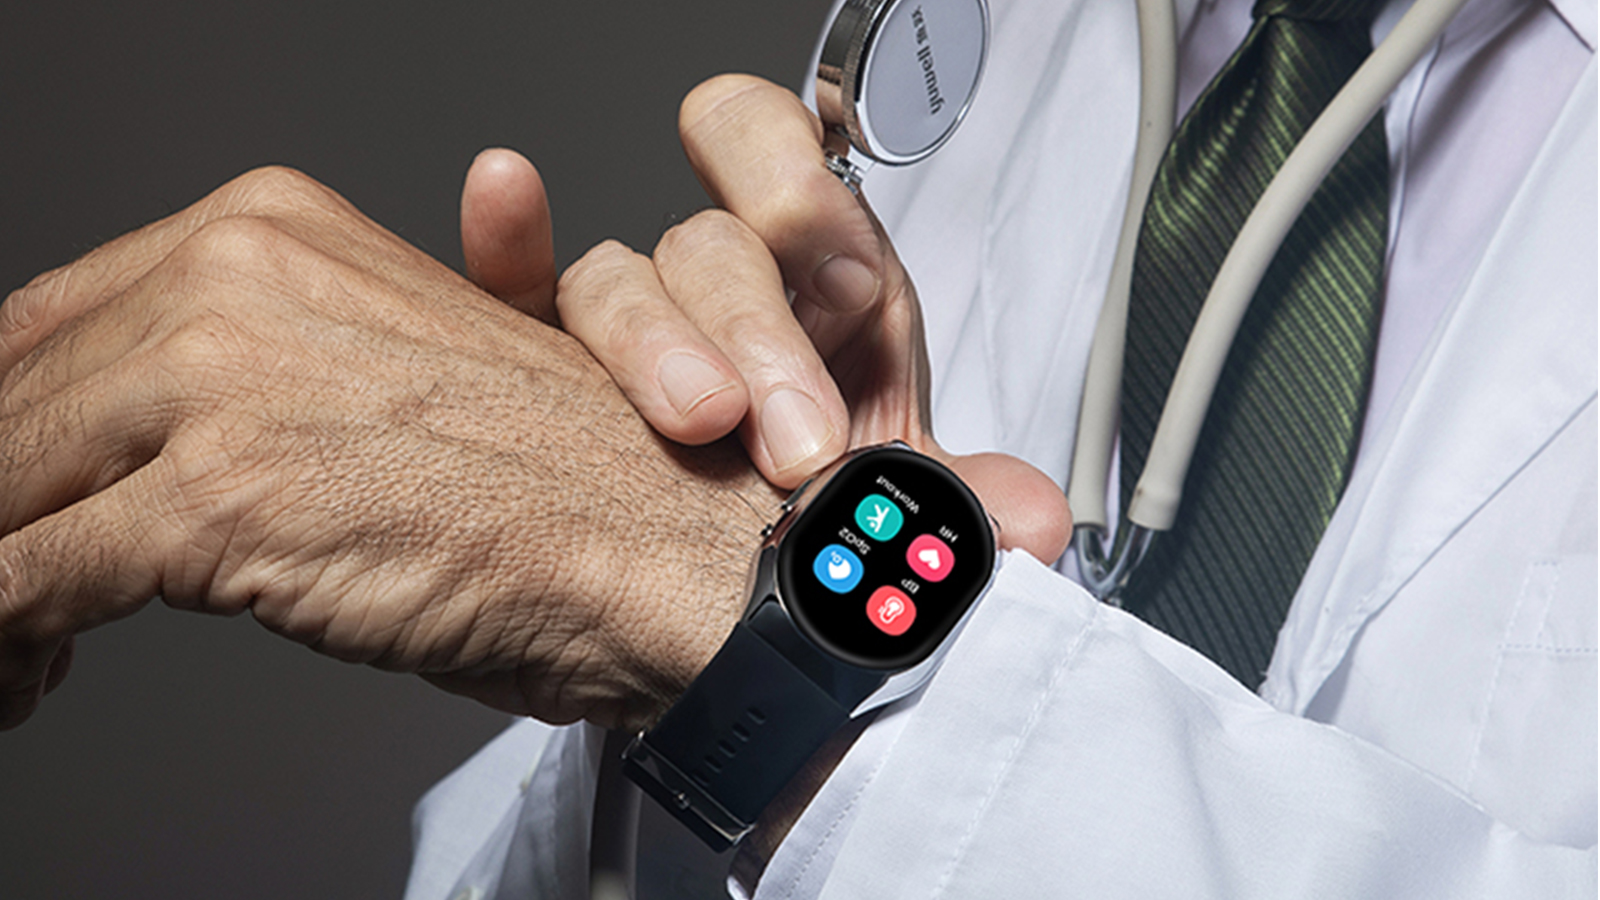 YHE BP Doctor Pro blood pressure monitoring smartwatch